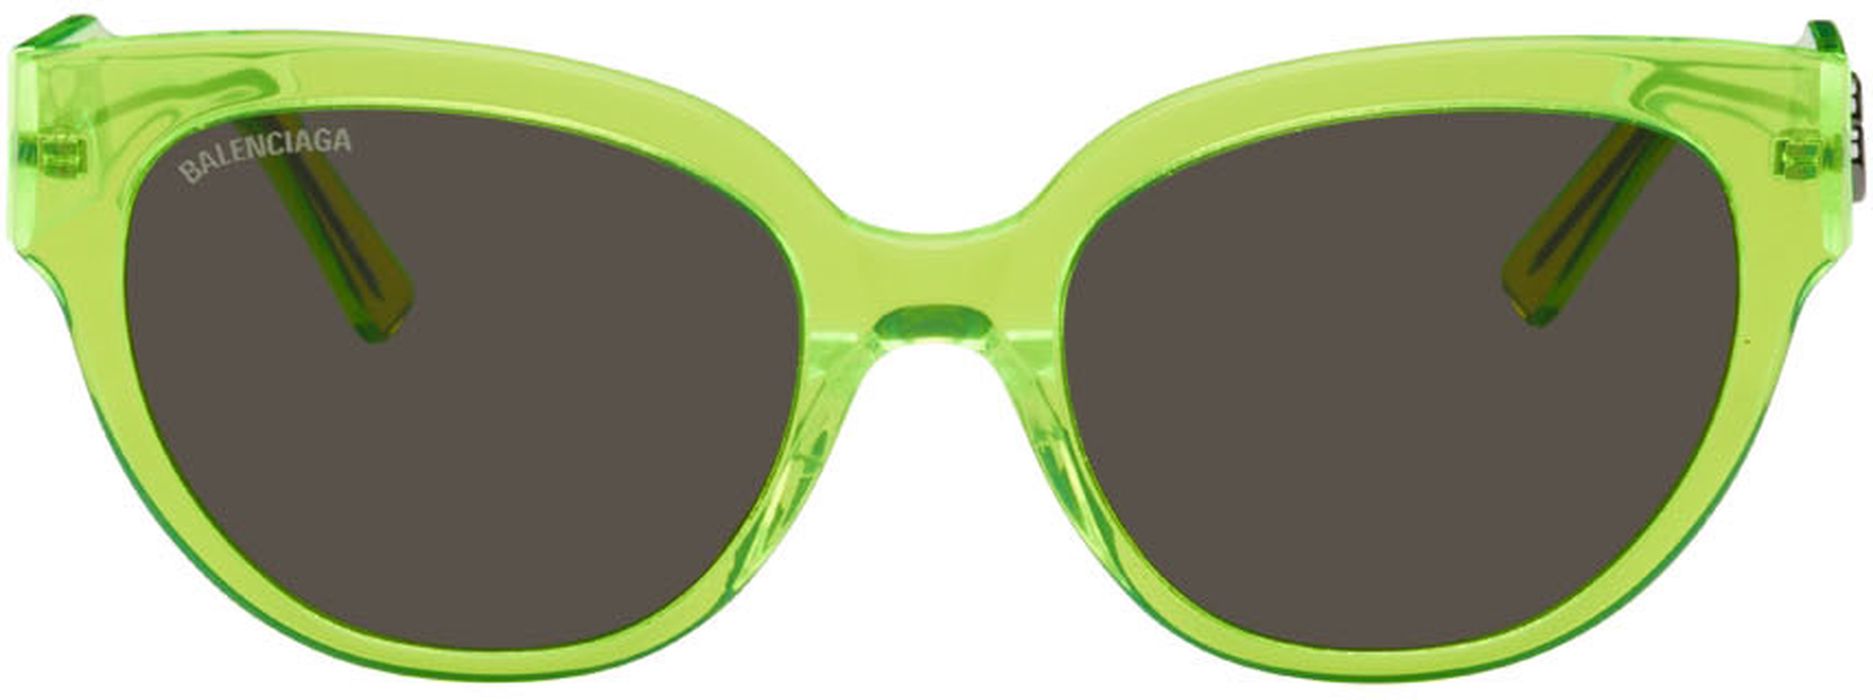 Balenciaga Gunmetal Metal Cat-Eye Sunglasses